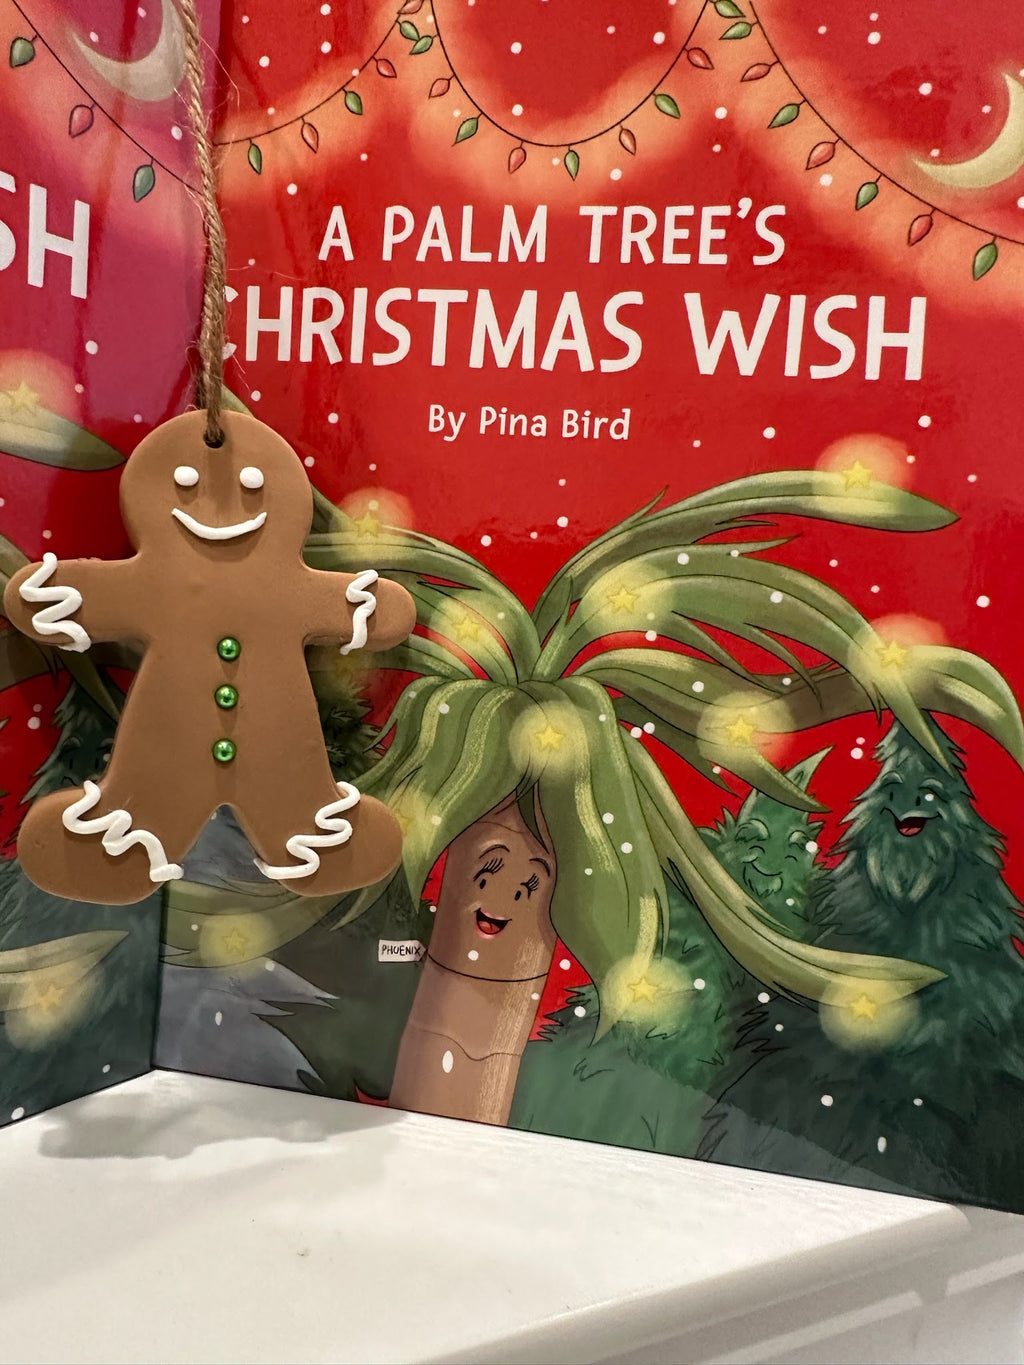 Bundle: A Palm Tree's Christmas Wish + Gingerbread Man Ornament